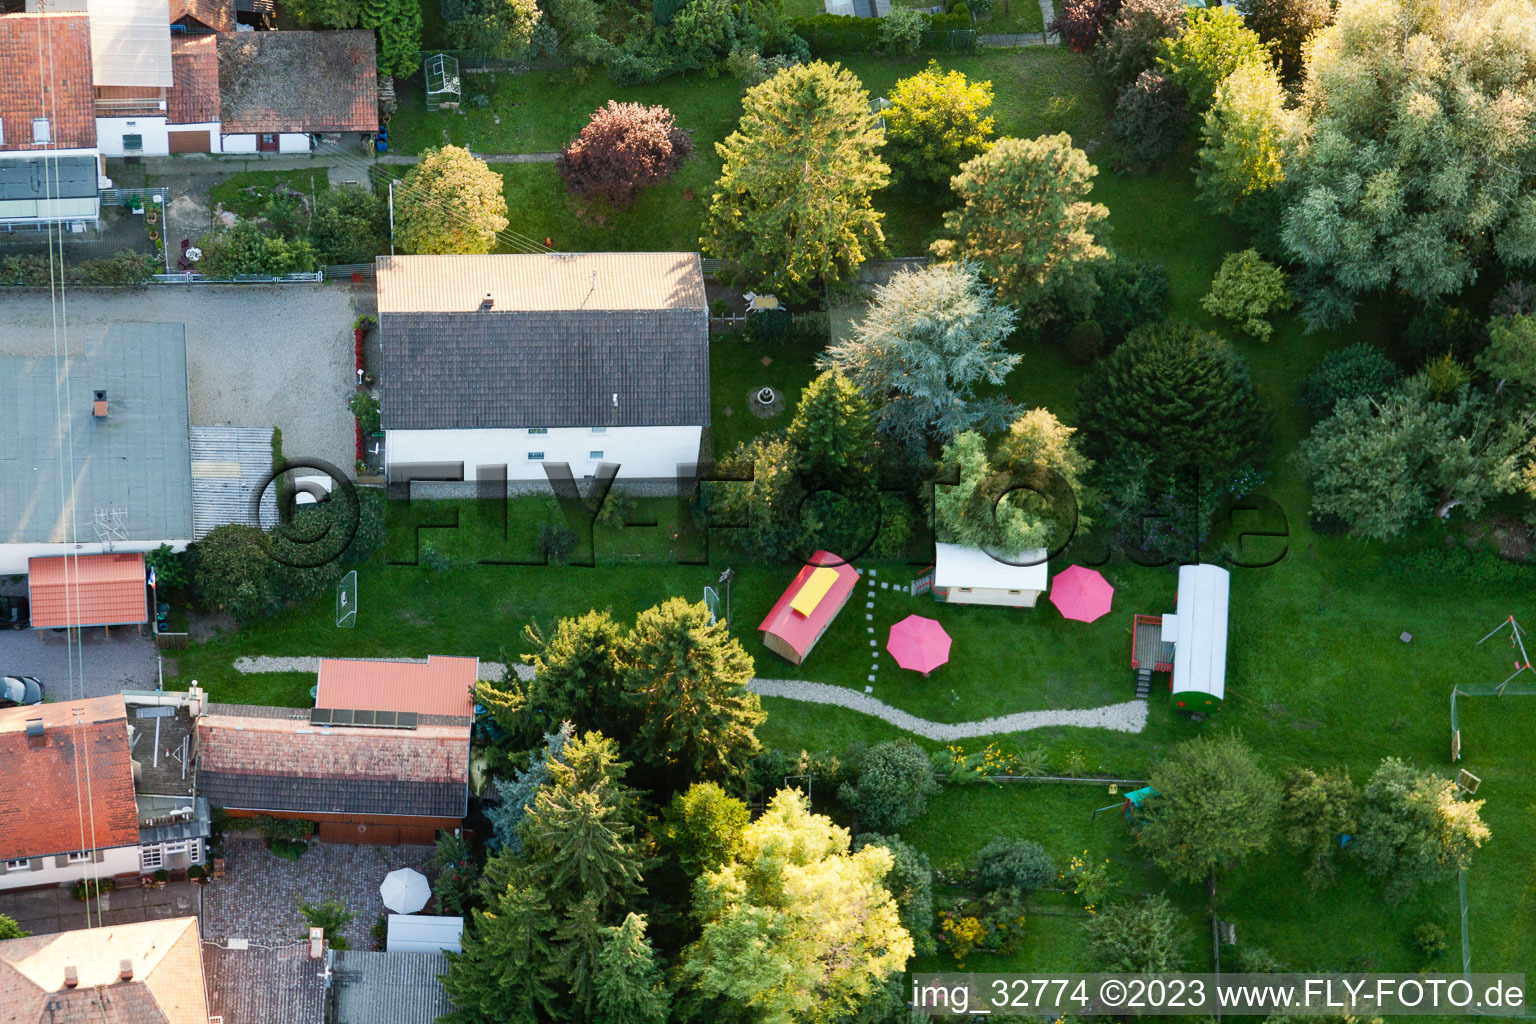 Villa Kunterbunt in Kandel in the state Rhineland-Palatinate, Germany